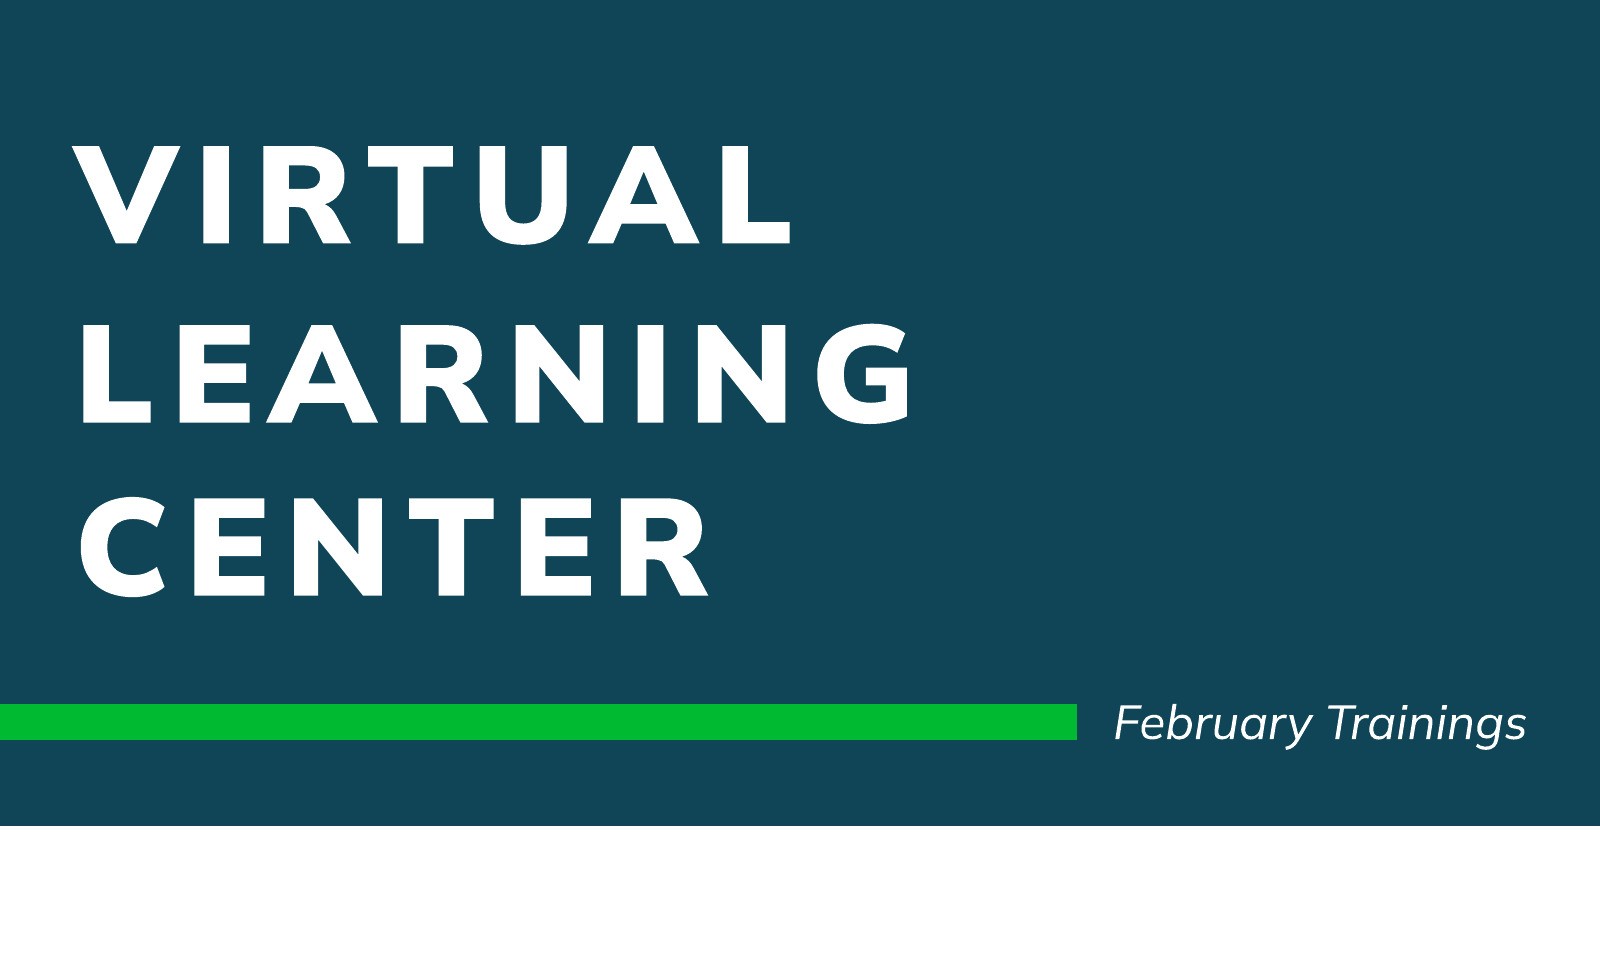 Virtual Learning Center, February Trainings